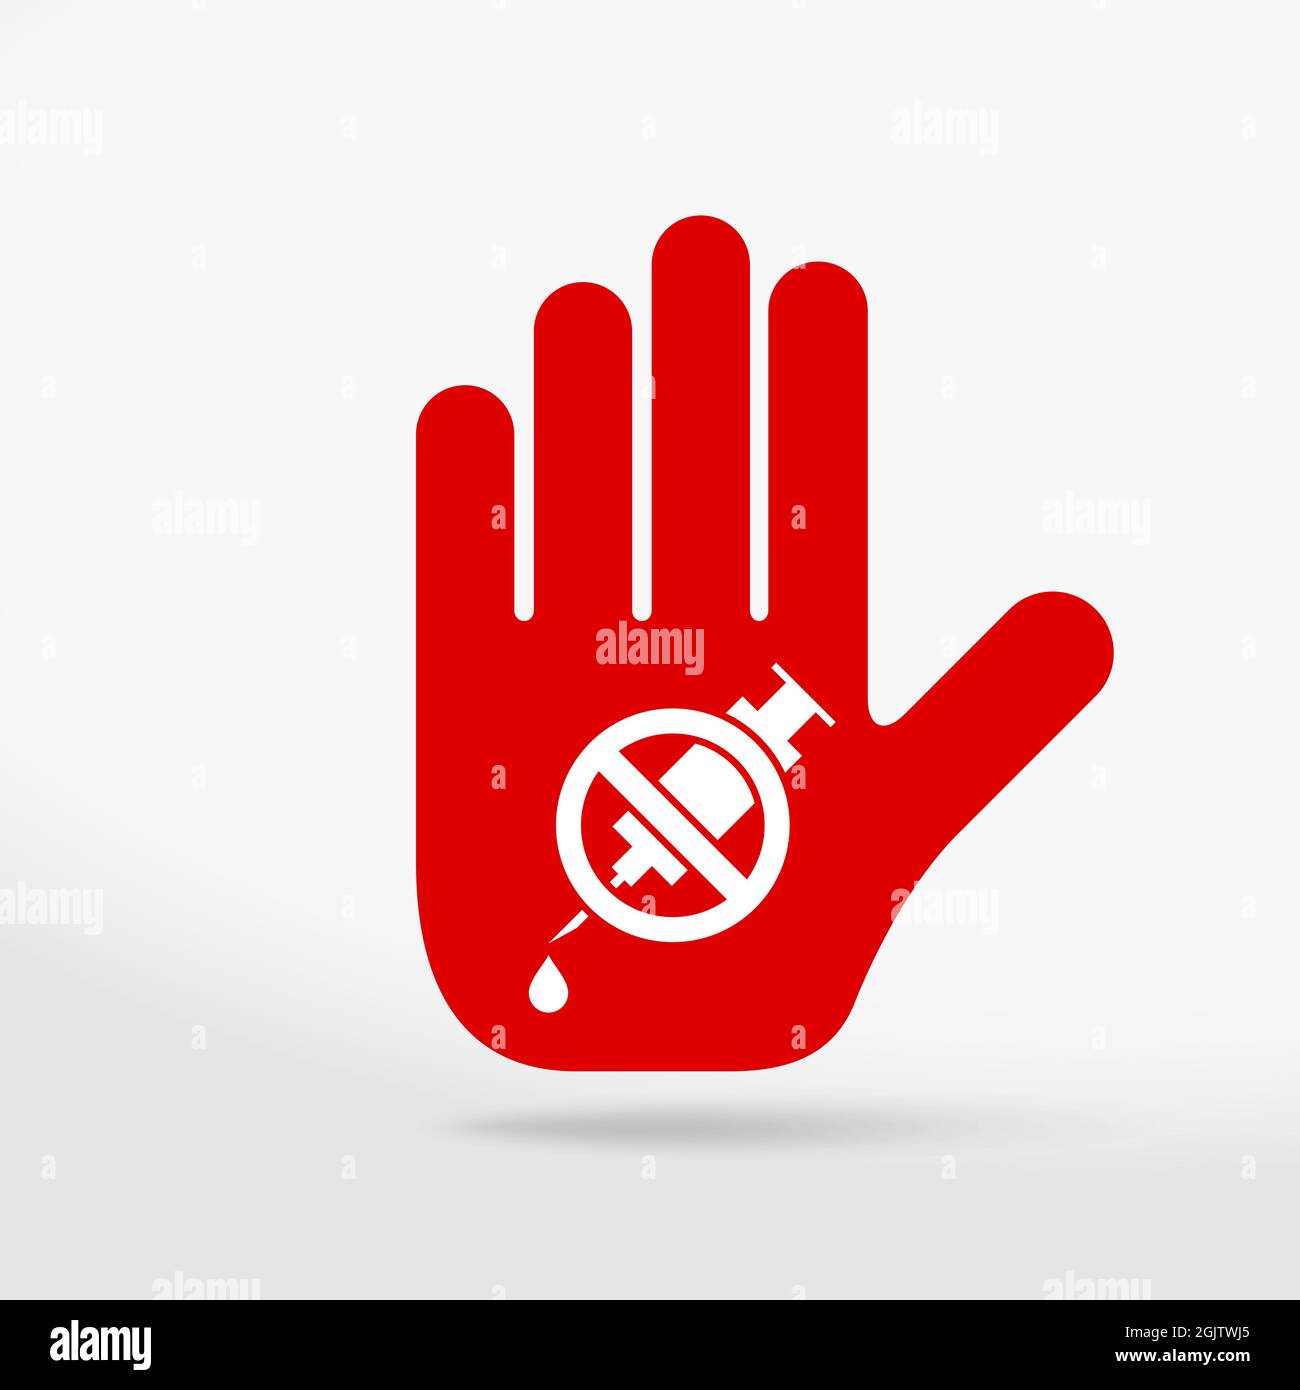 No drugs allowed prohibition sign. Stop hand icon. No symbol, halt gesture, prohibited symbol isolated on white. illustration. Stock Photo